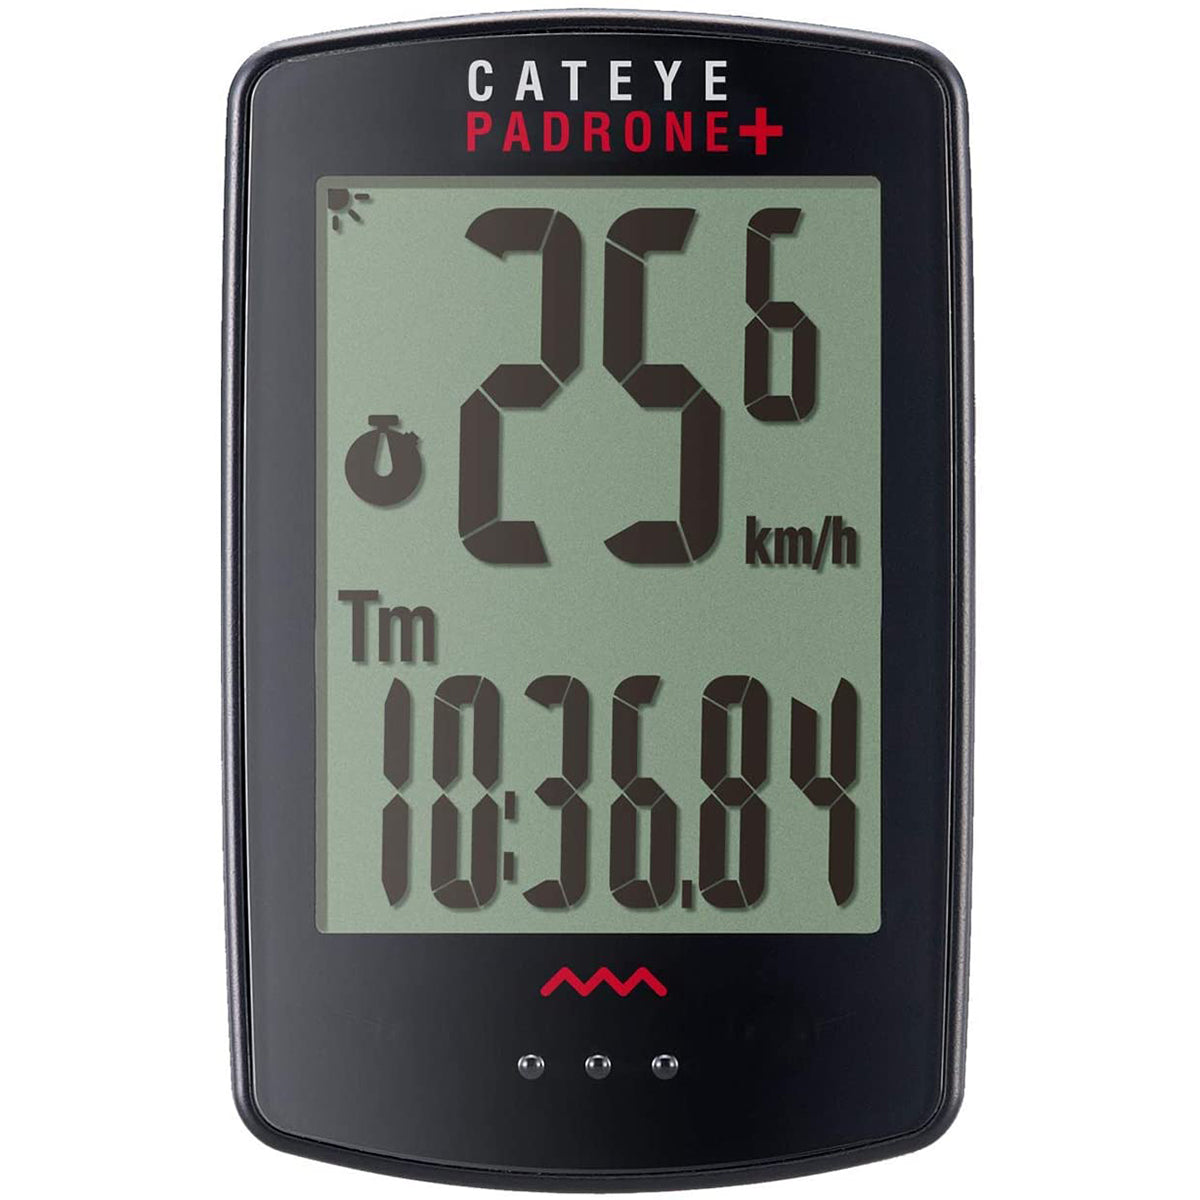 CatEye Padrone Plus Cycling Computer - CC-PA110W Cateye